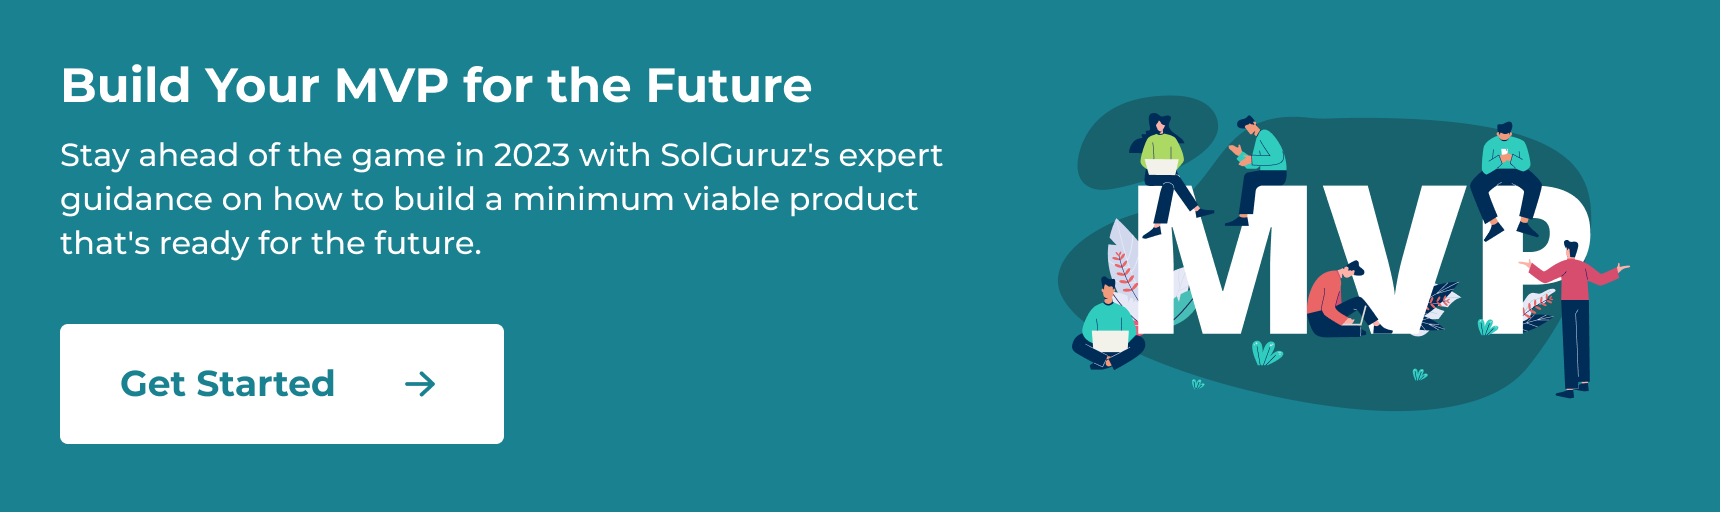 Build your Minimum Viable Product in 2023 with SolGuruz